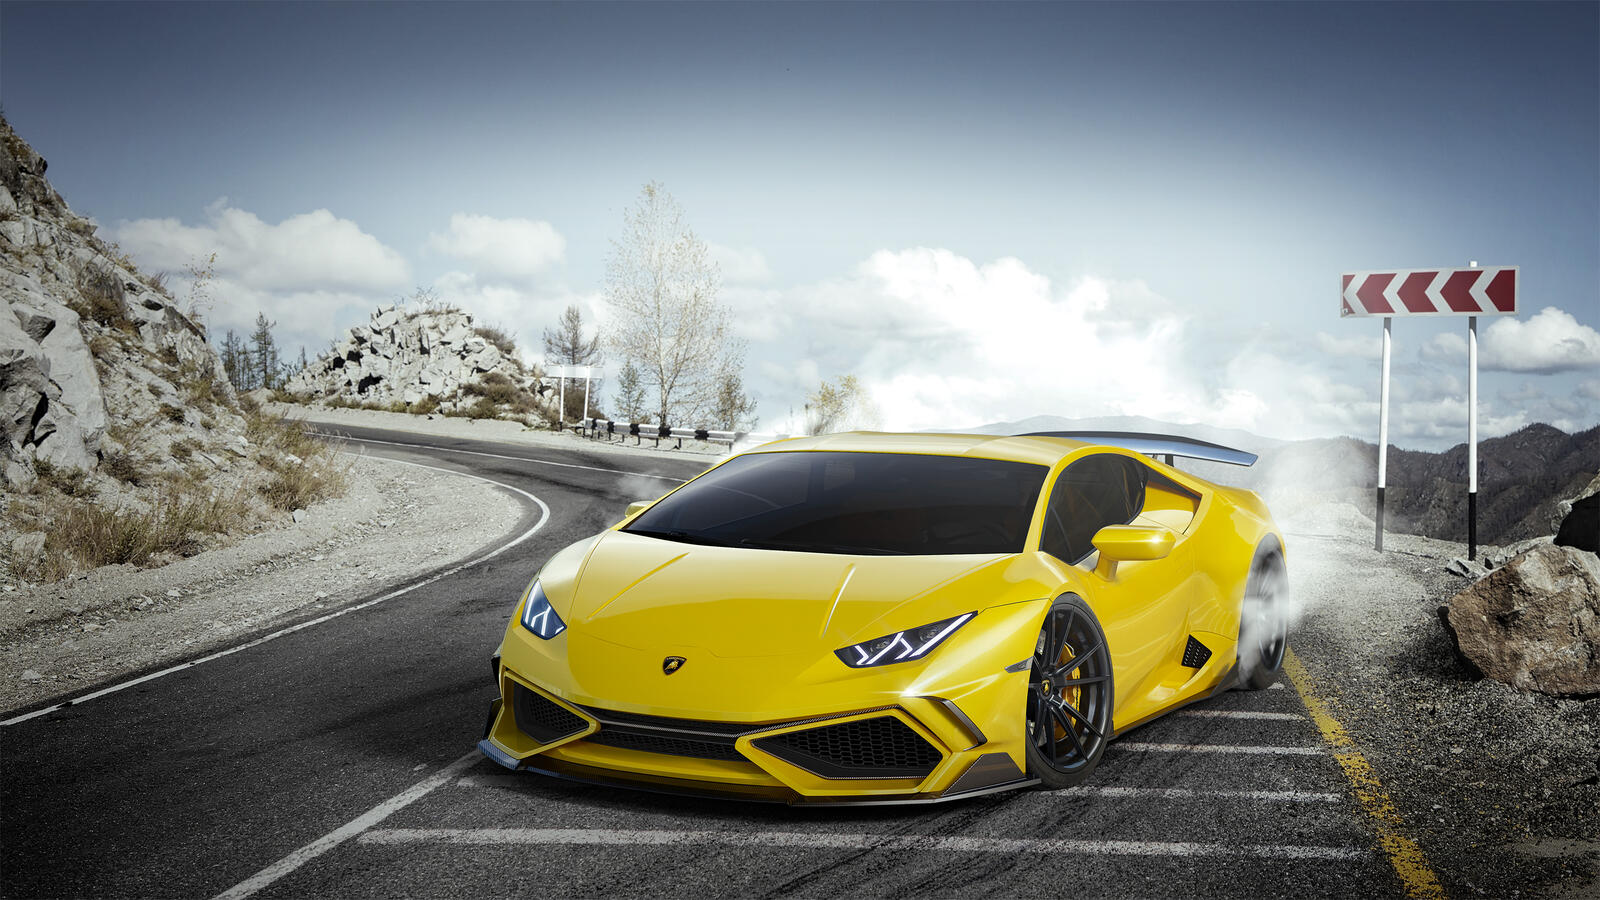 Wallpapers Lamborghini Behance Lamborghini Huracan on the desktop